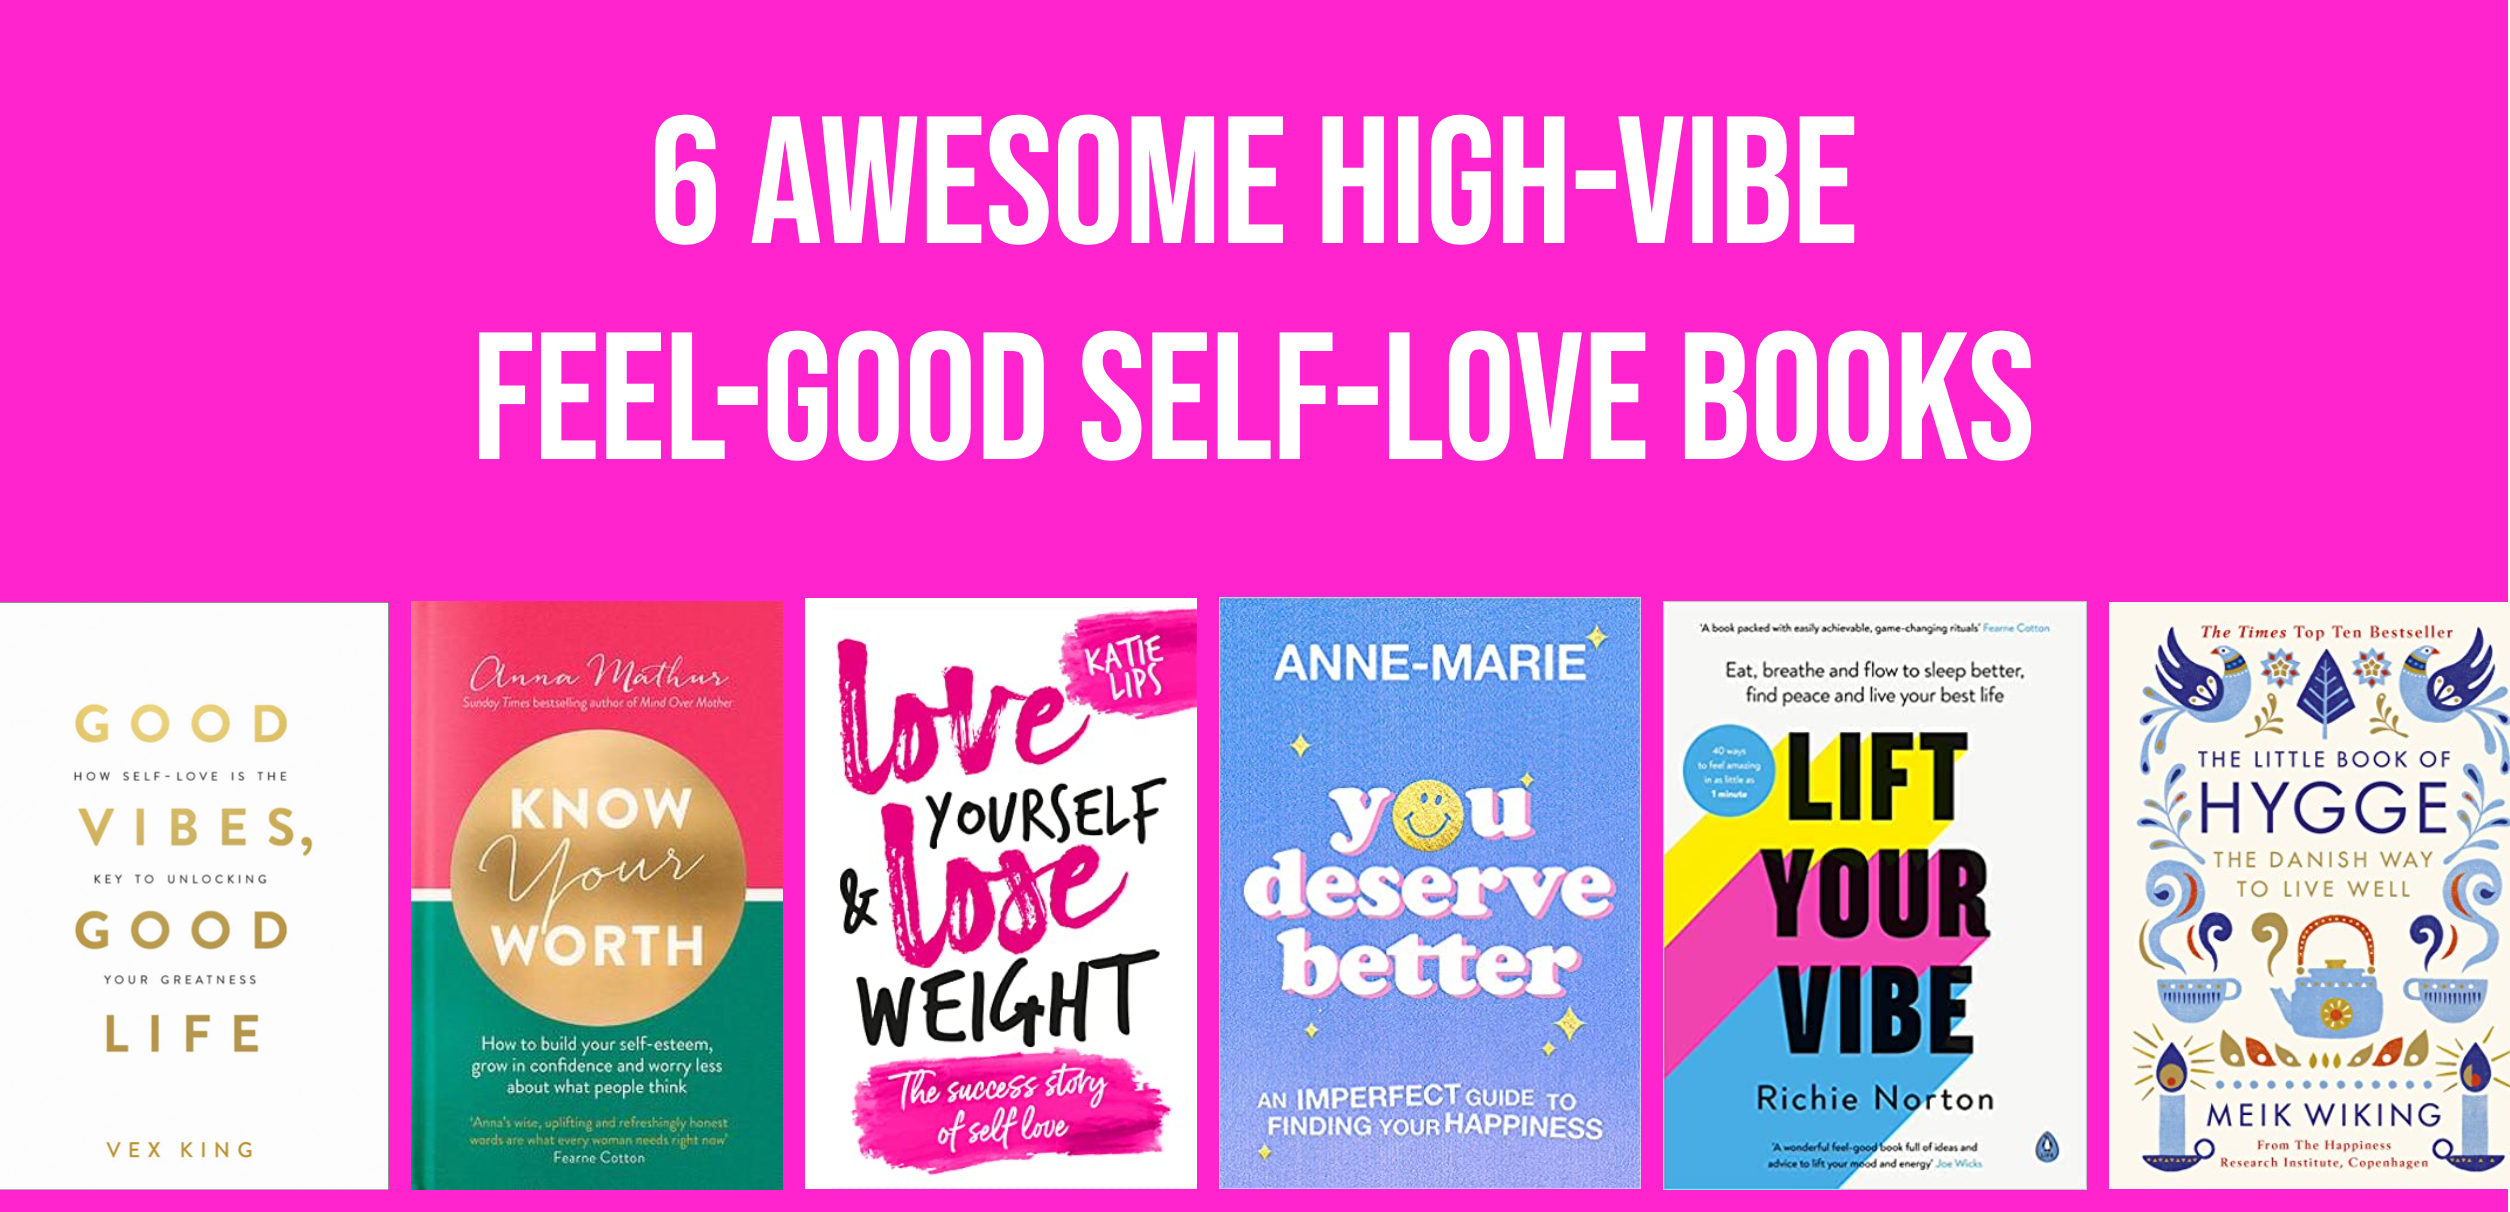 6 Awesome High-Vibe Feel-Good Self-Love Books Giveaway